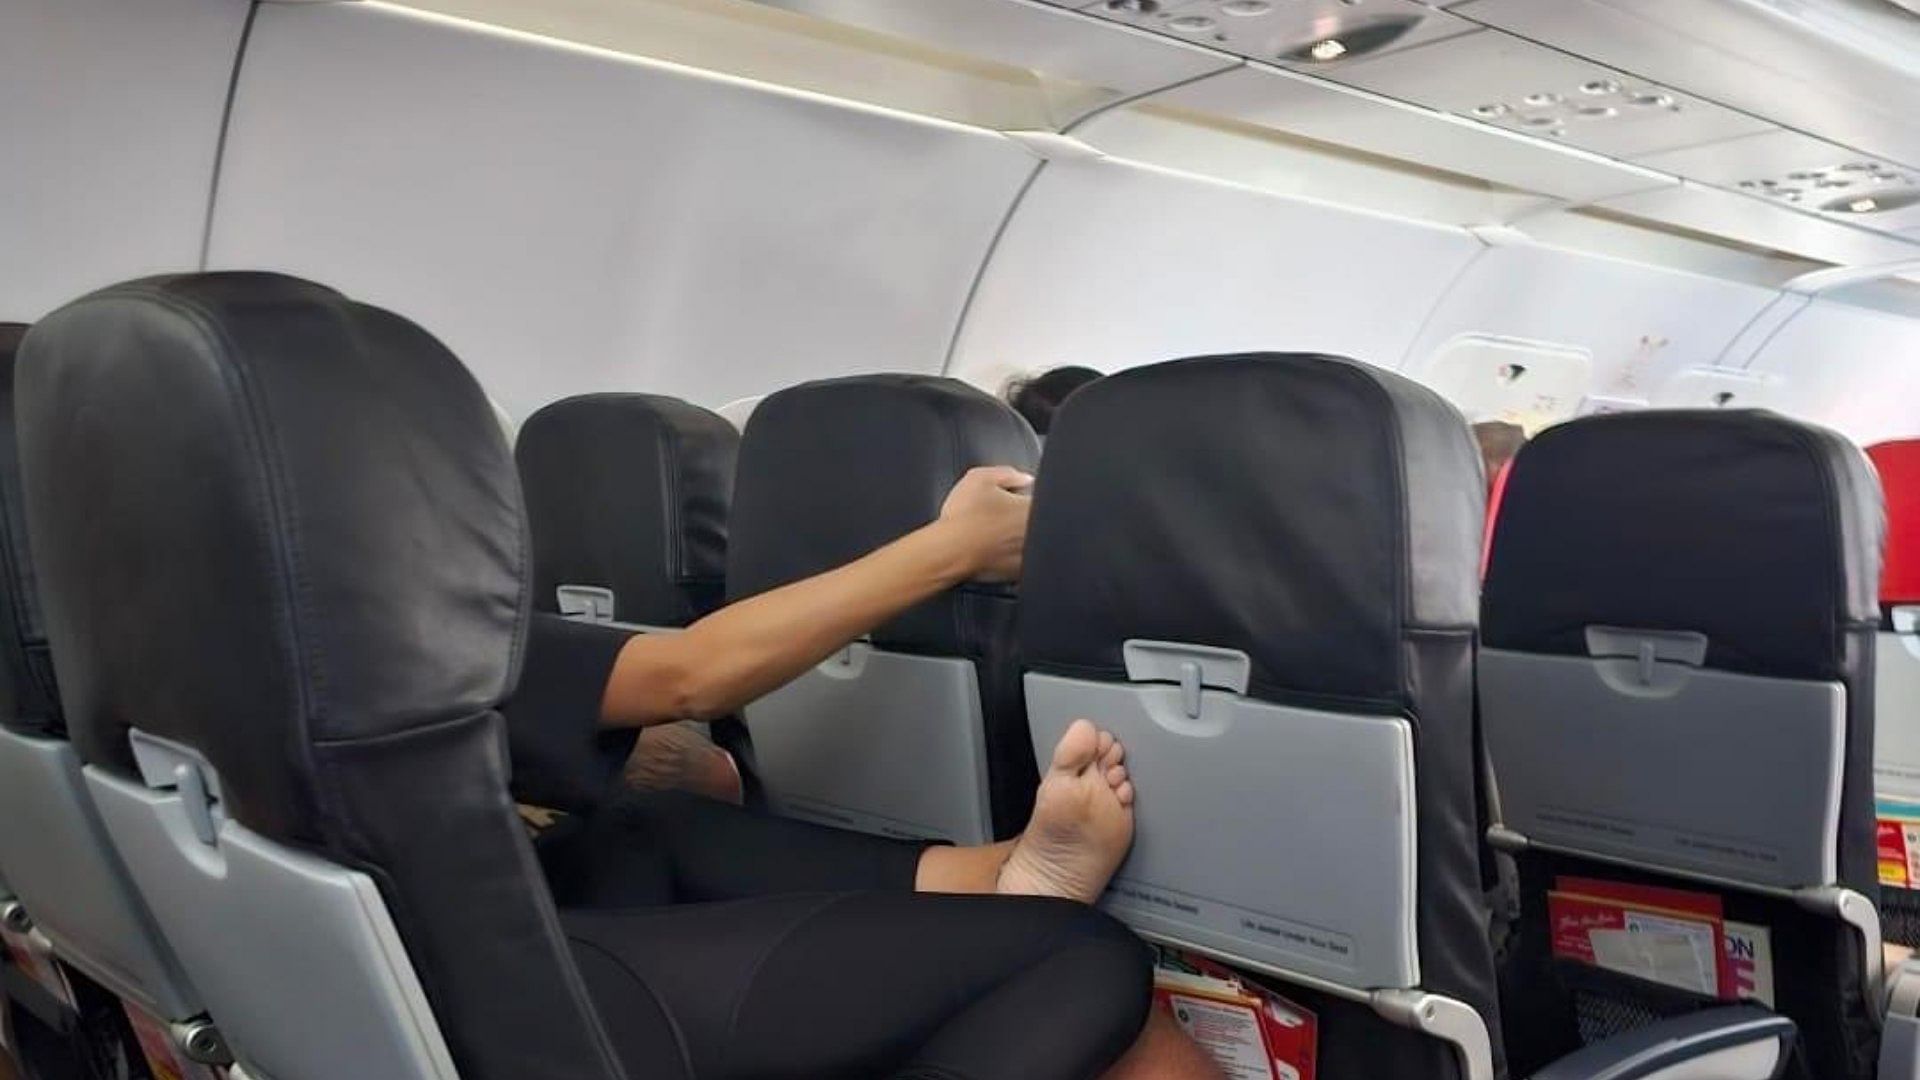 Viral News: Couple's Public Display of Affection on Flight Upsets Passenger